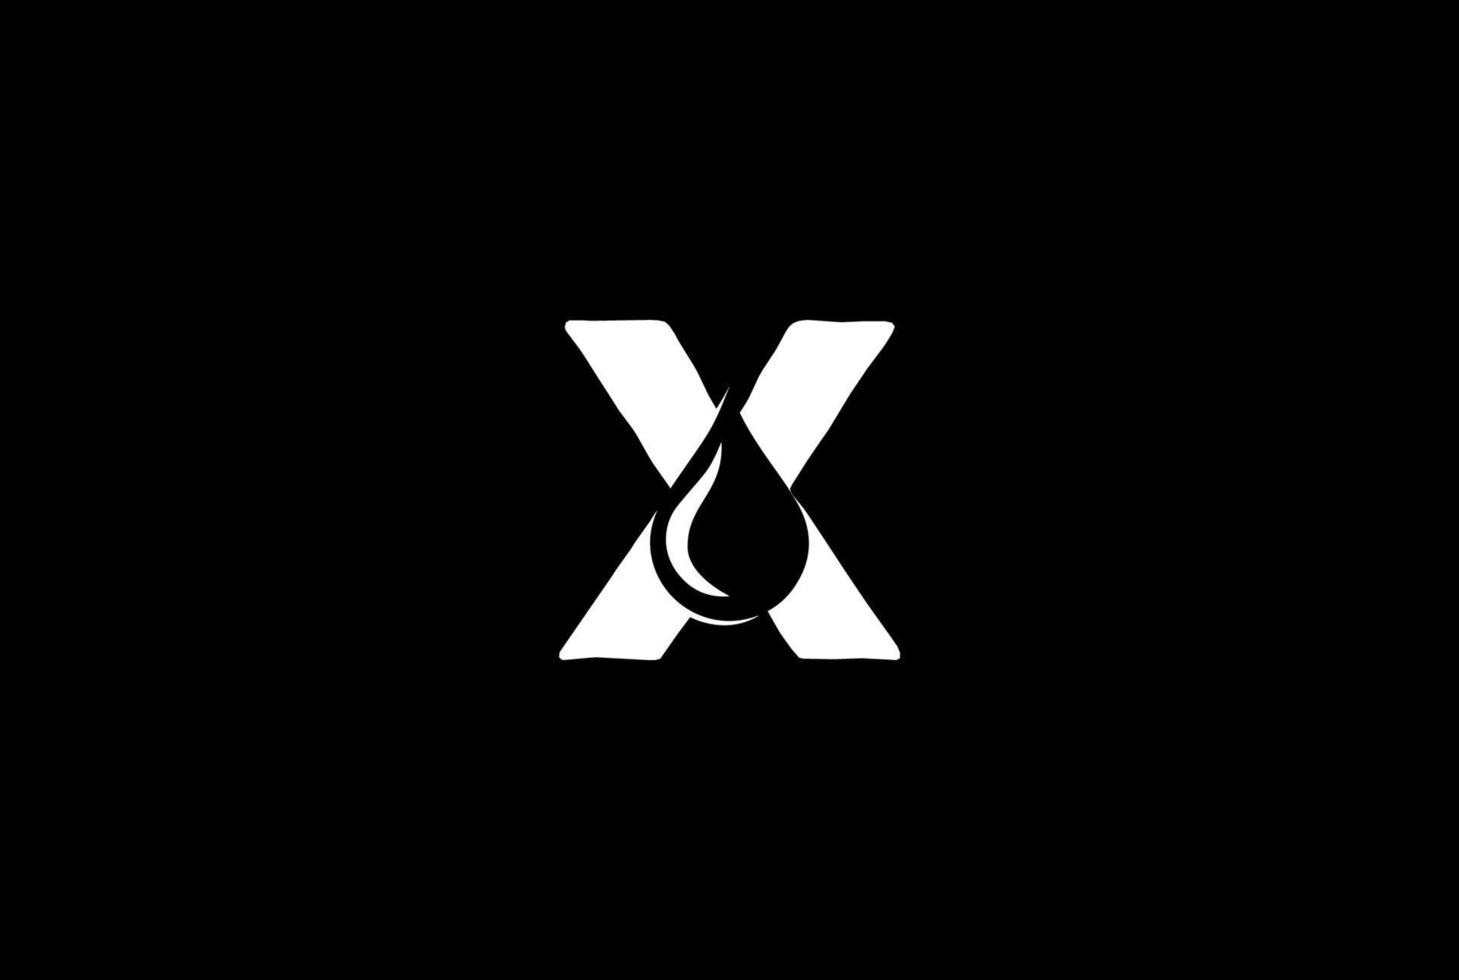 Retro Initial Letter X with Water Oil Liquid Aqua Drop for Extract Logo Design Vector